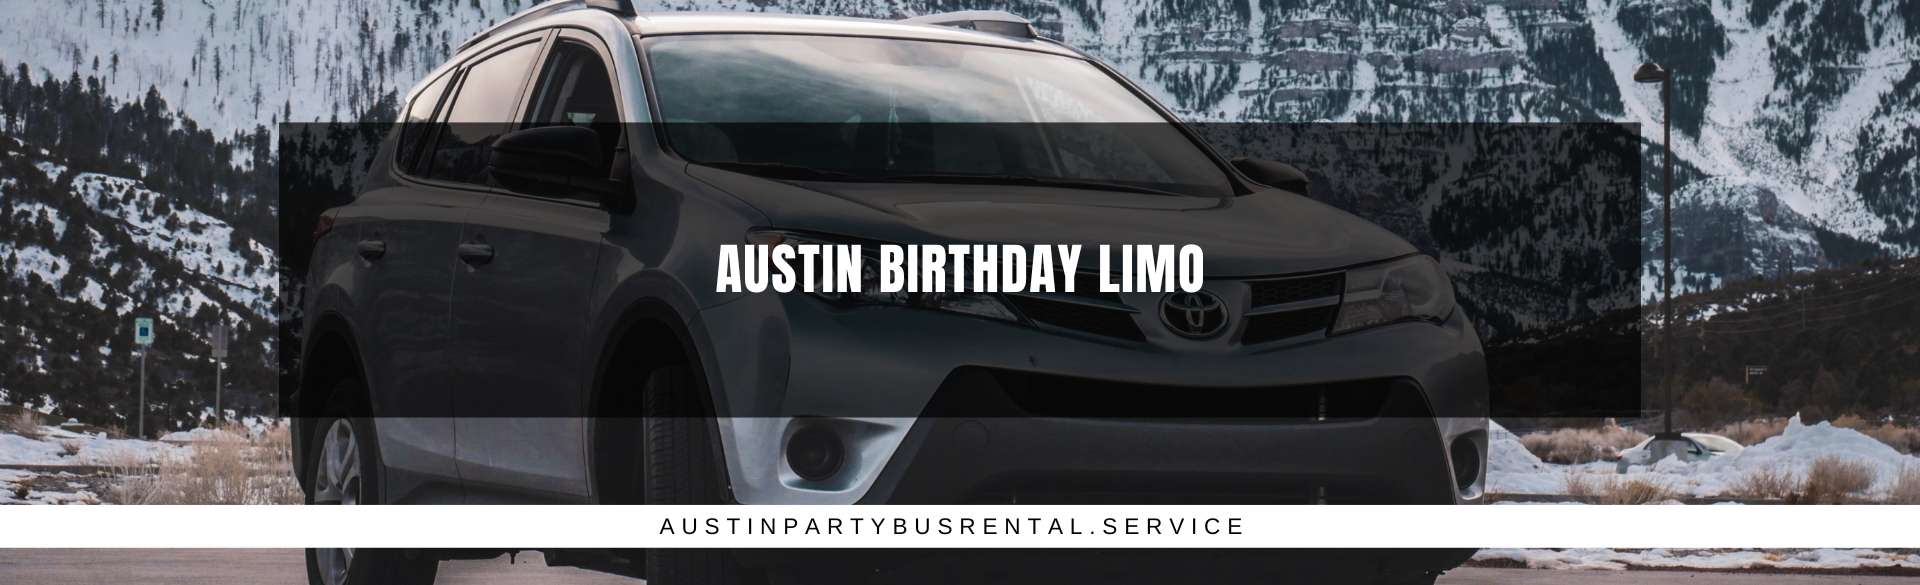 Austin Birthday Limo